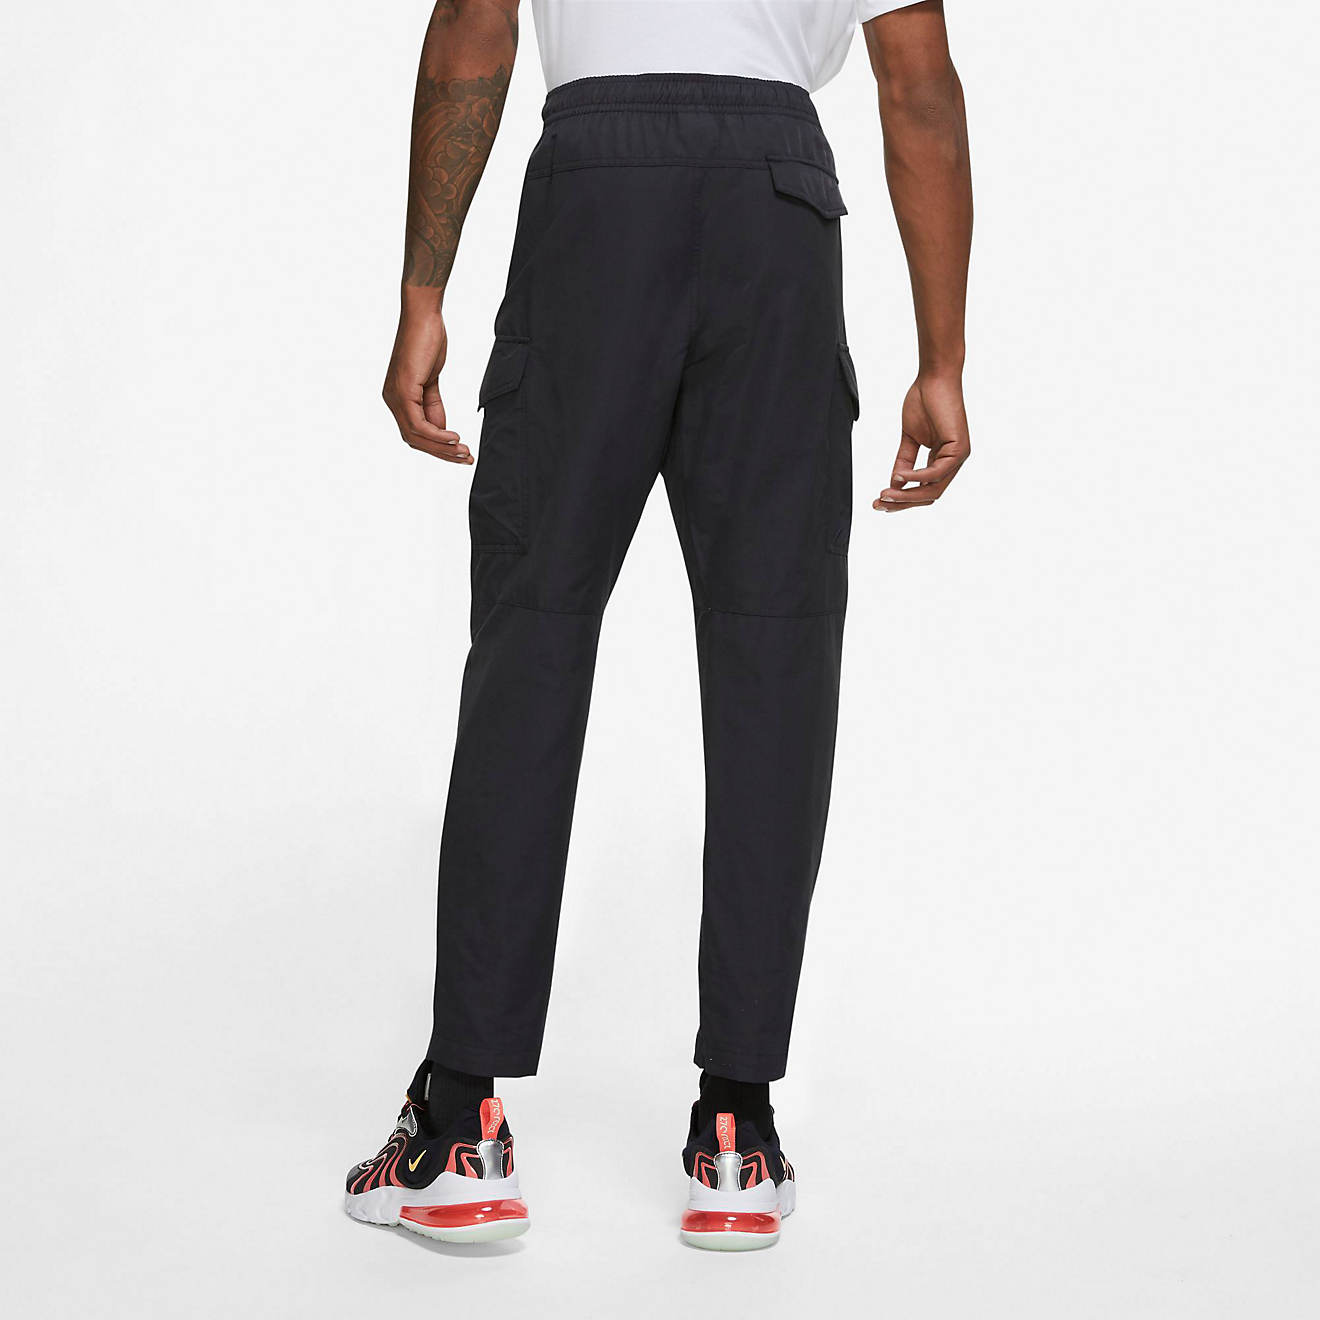 Nike Men's SPE Woven Unlined Utility Pants | Academy